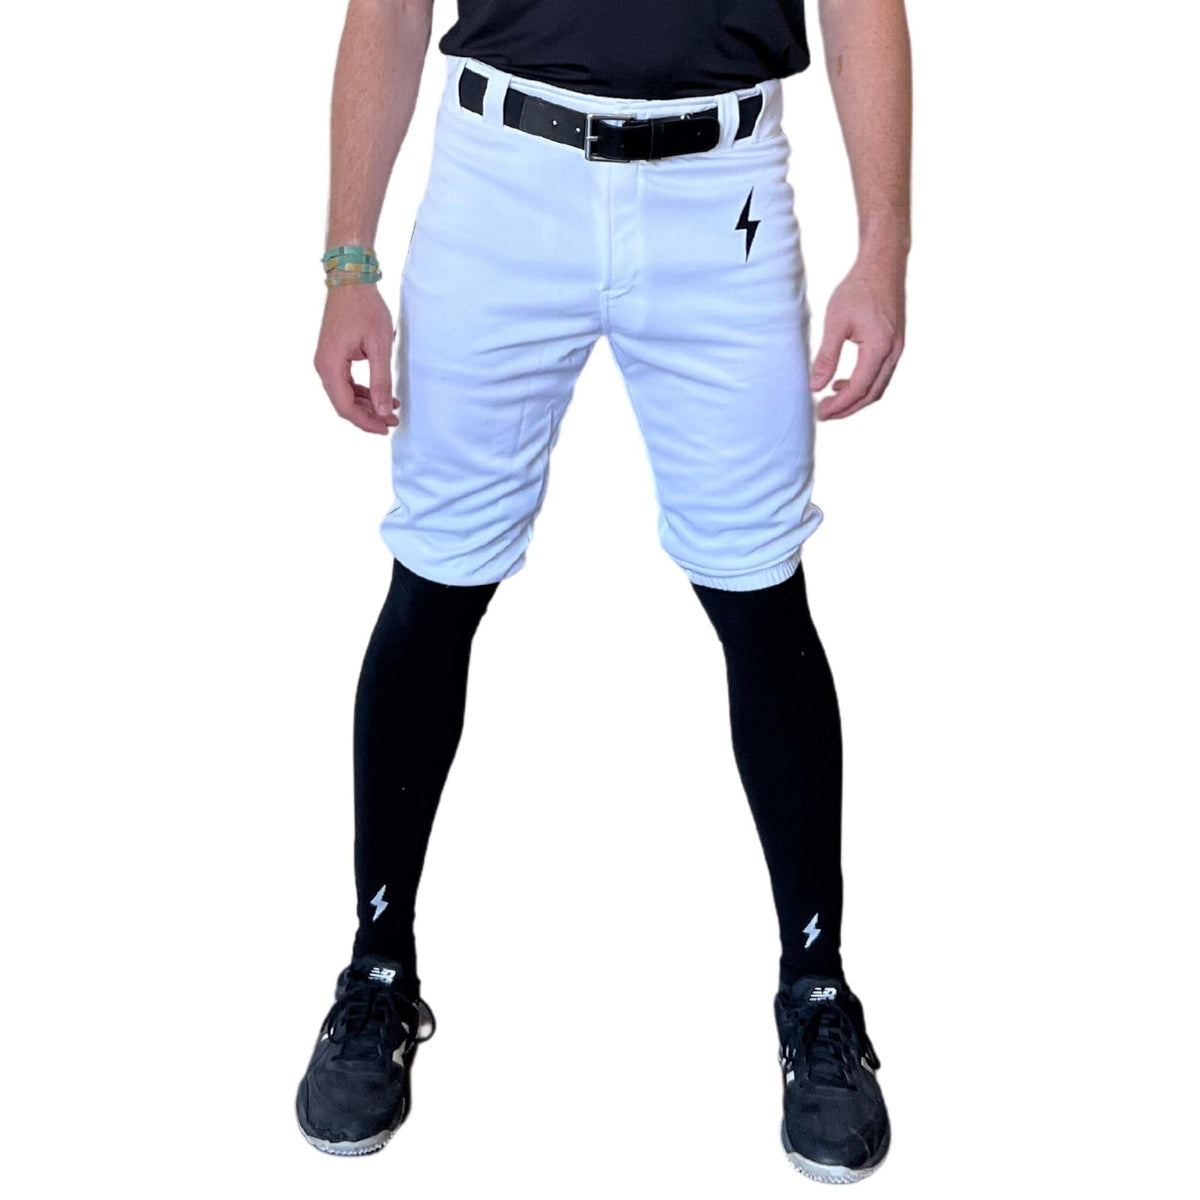 BRUCE BOLT Premium Pro Baseball Short - WHITE w/ Black